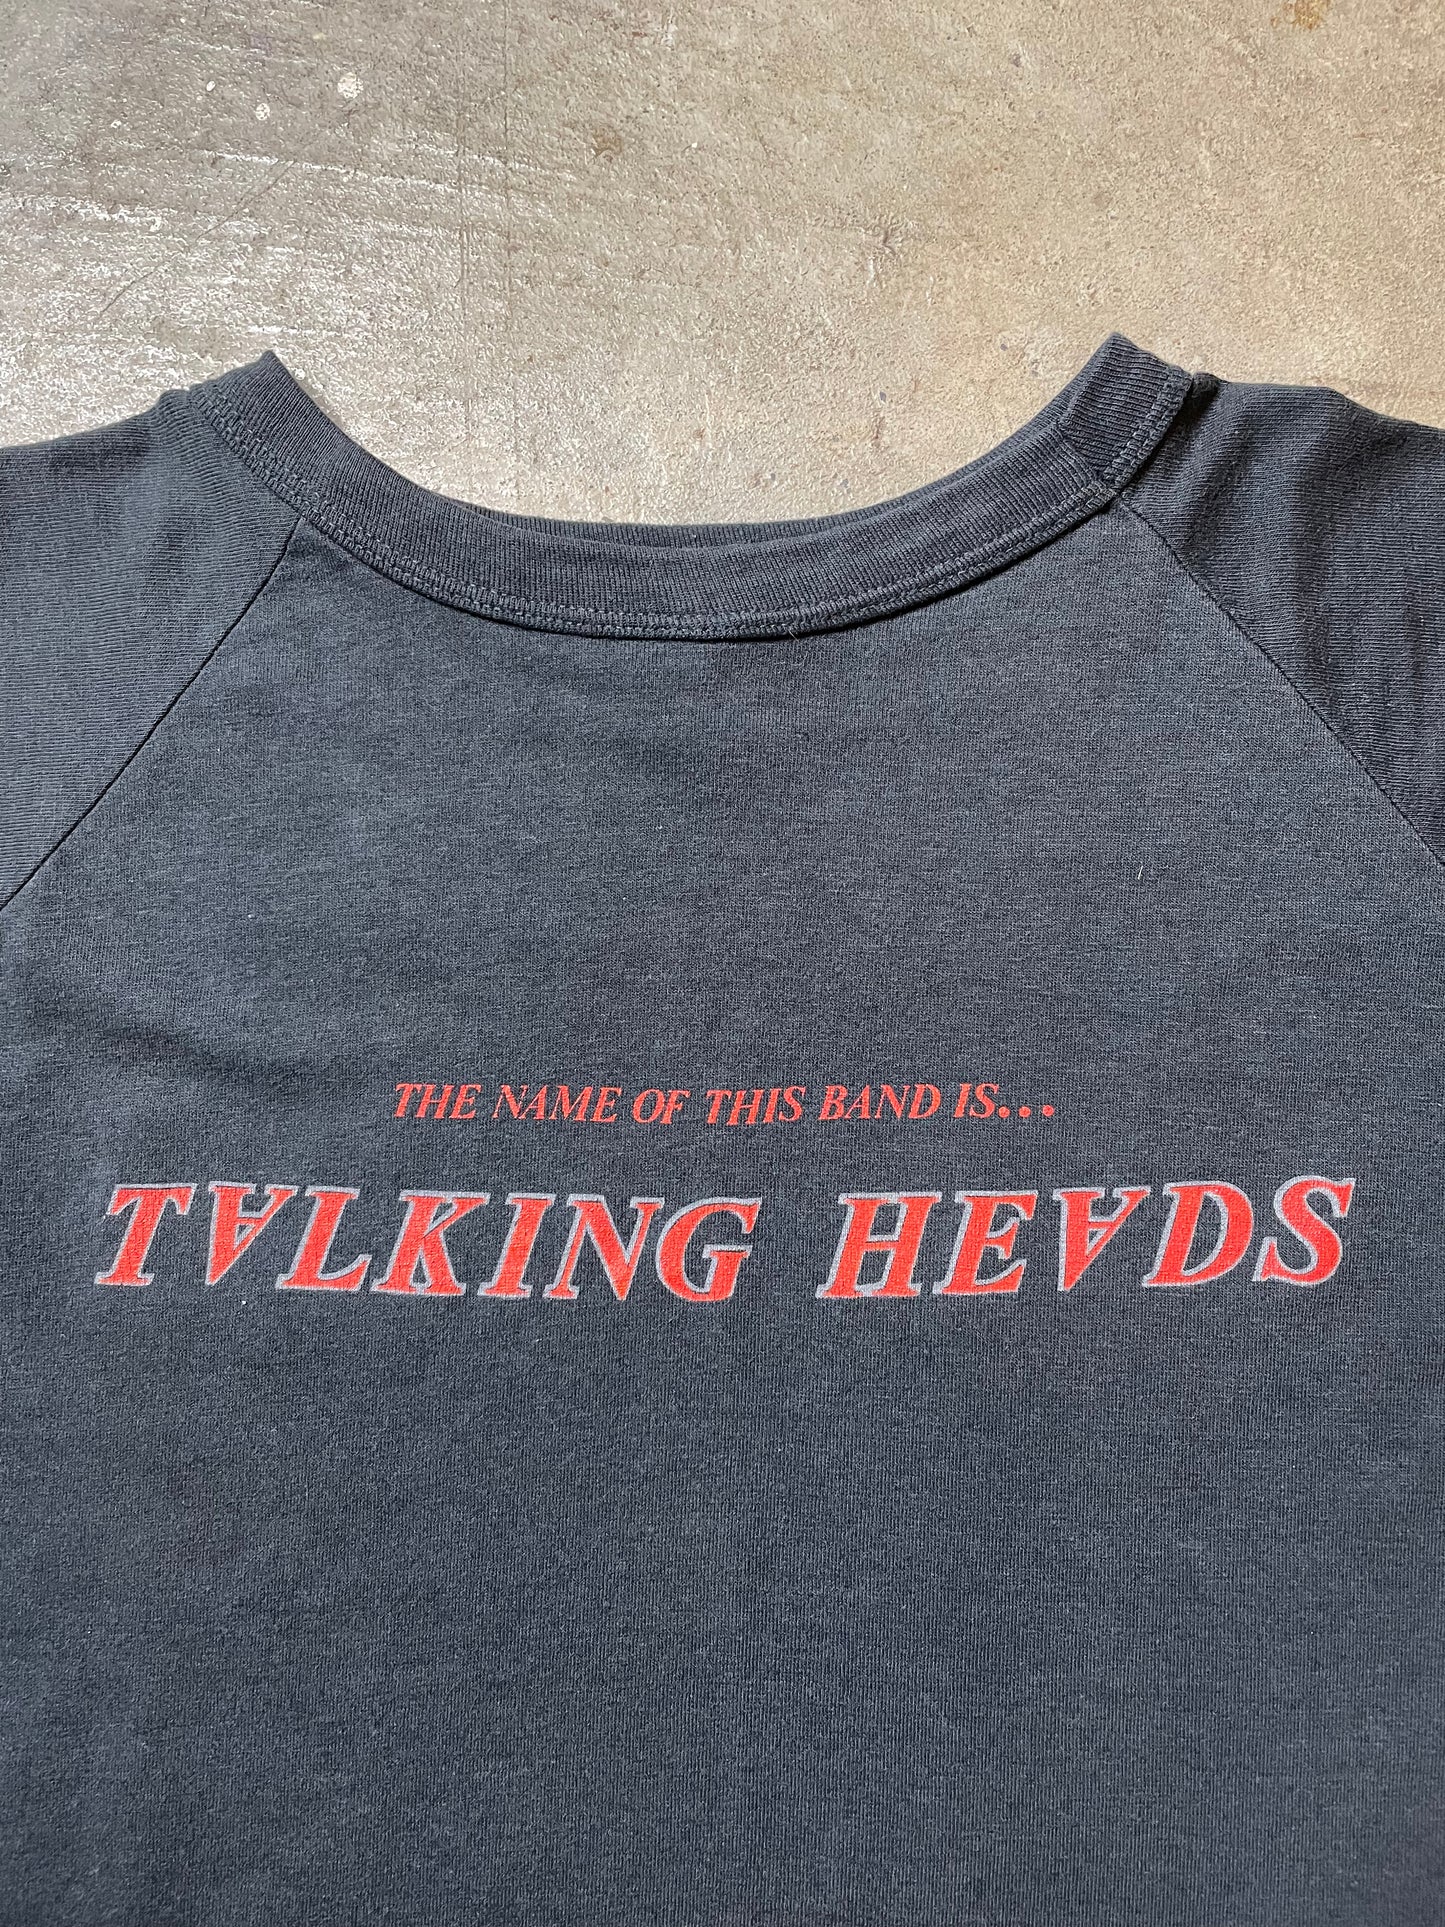 1980s Talking Heads Tee